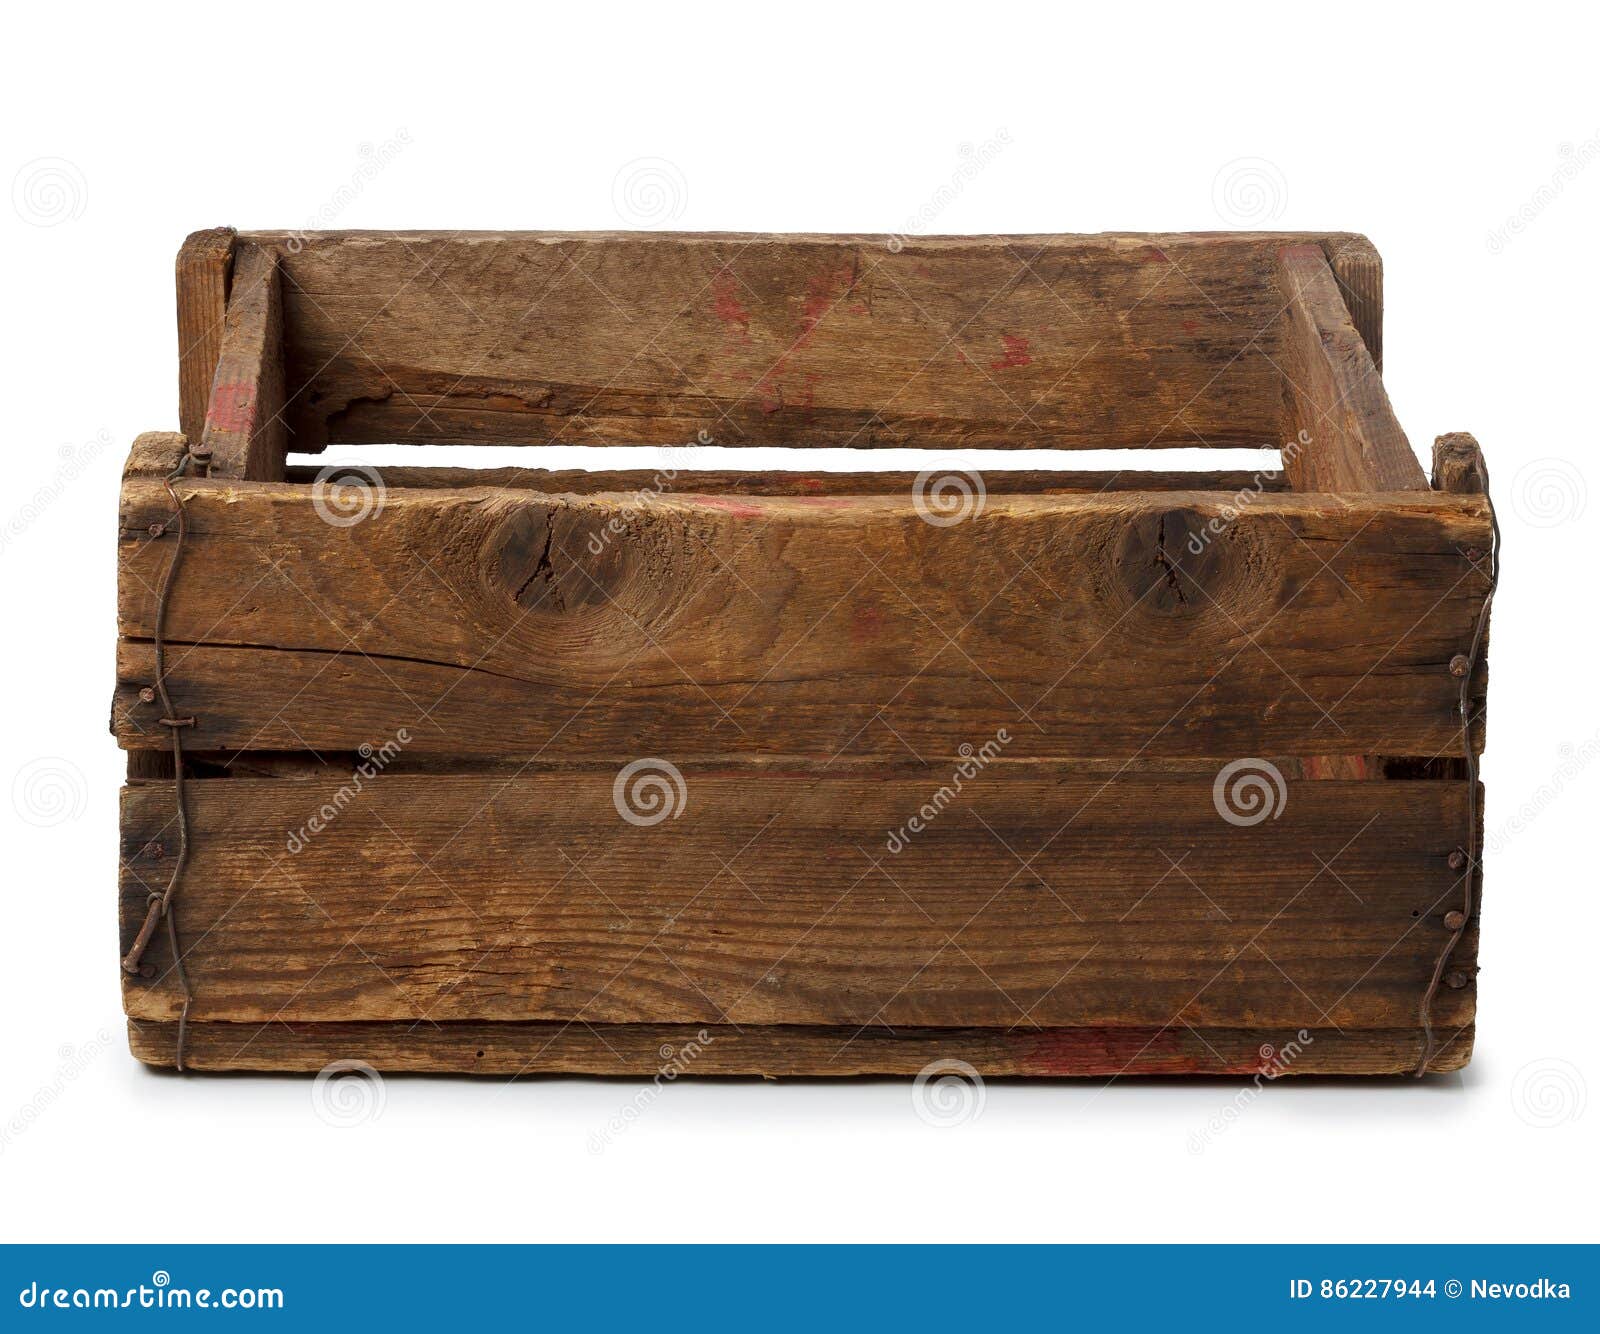 vintage empty wooden crate